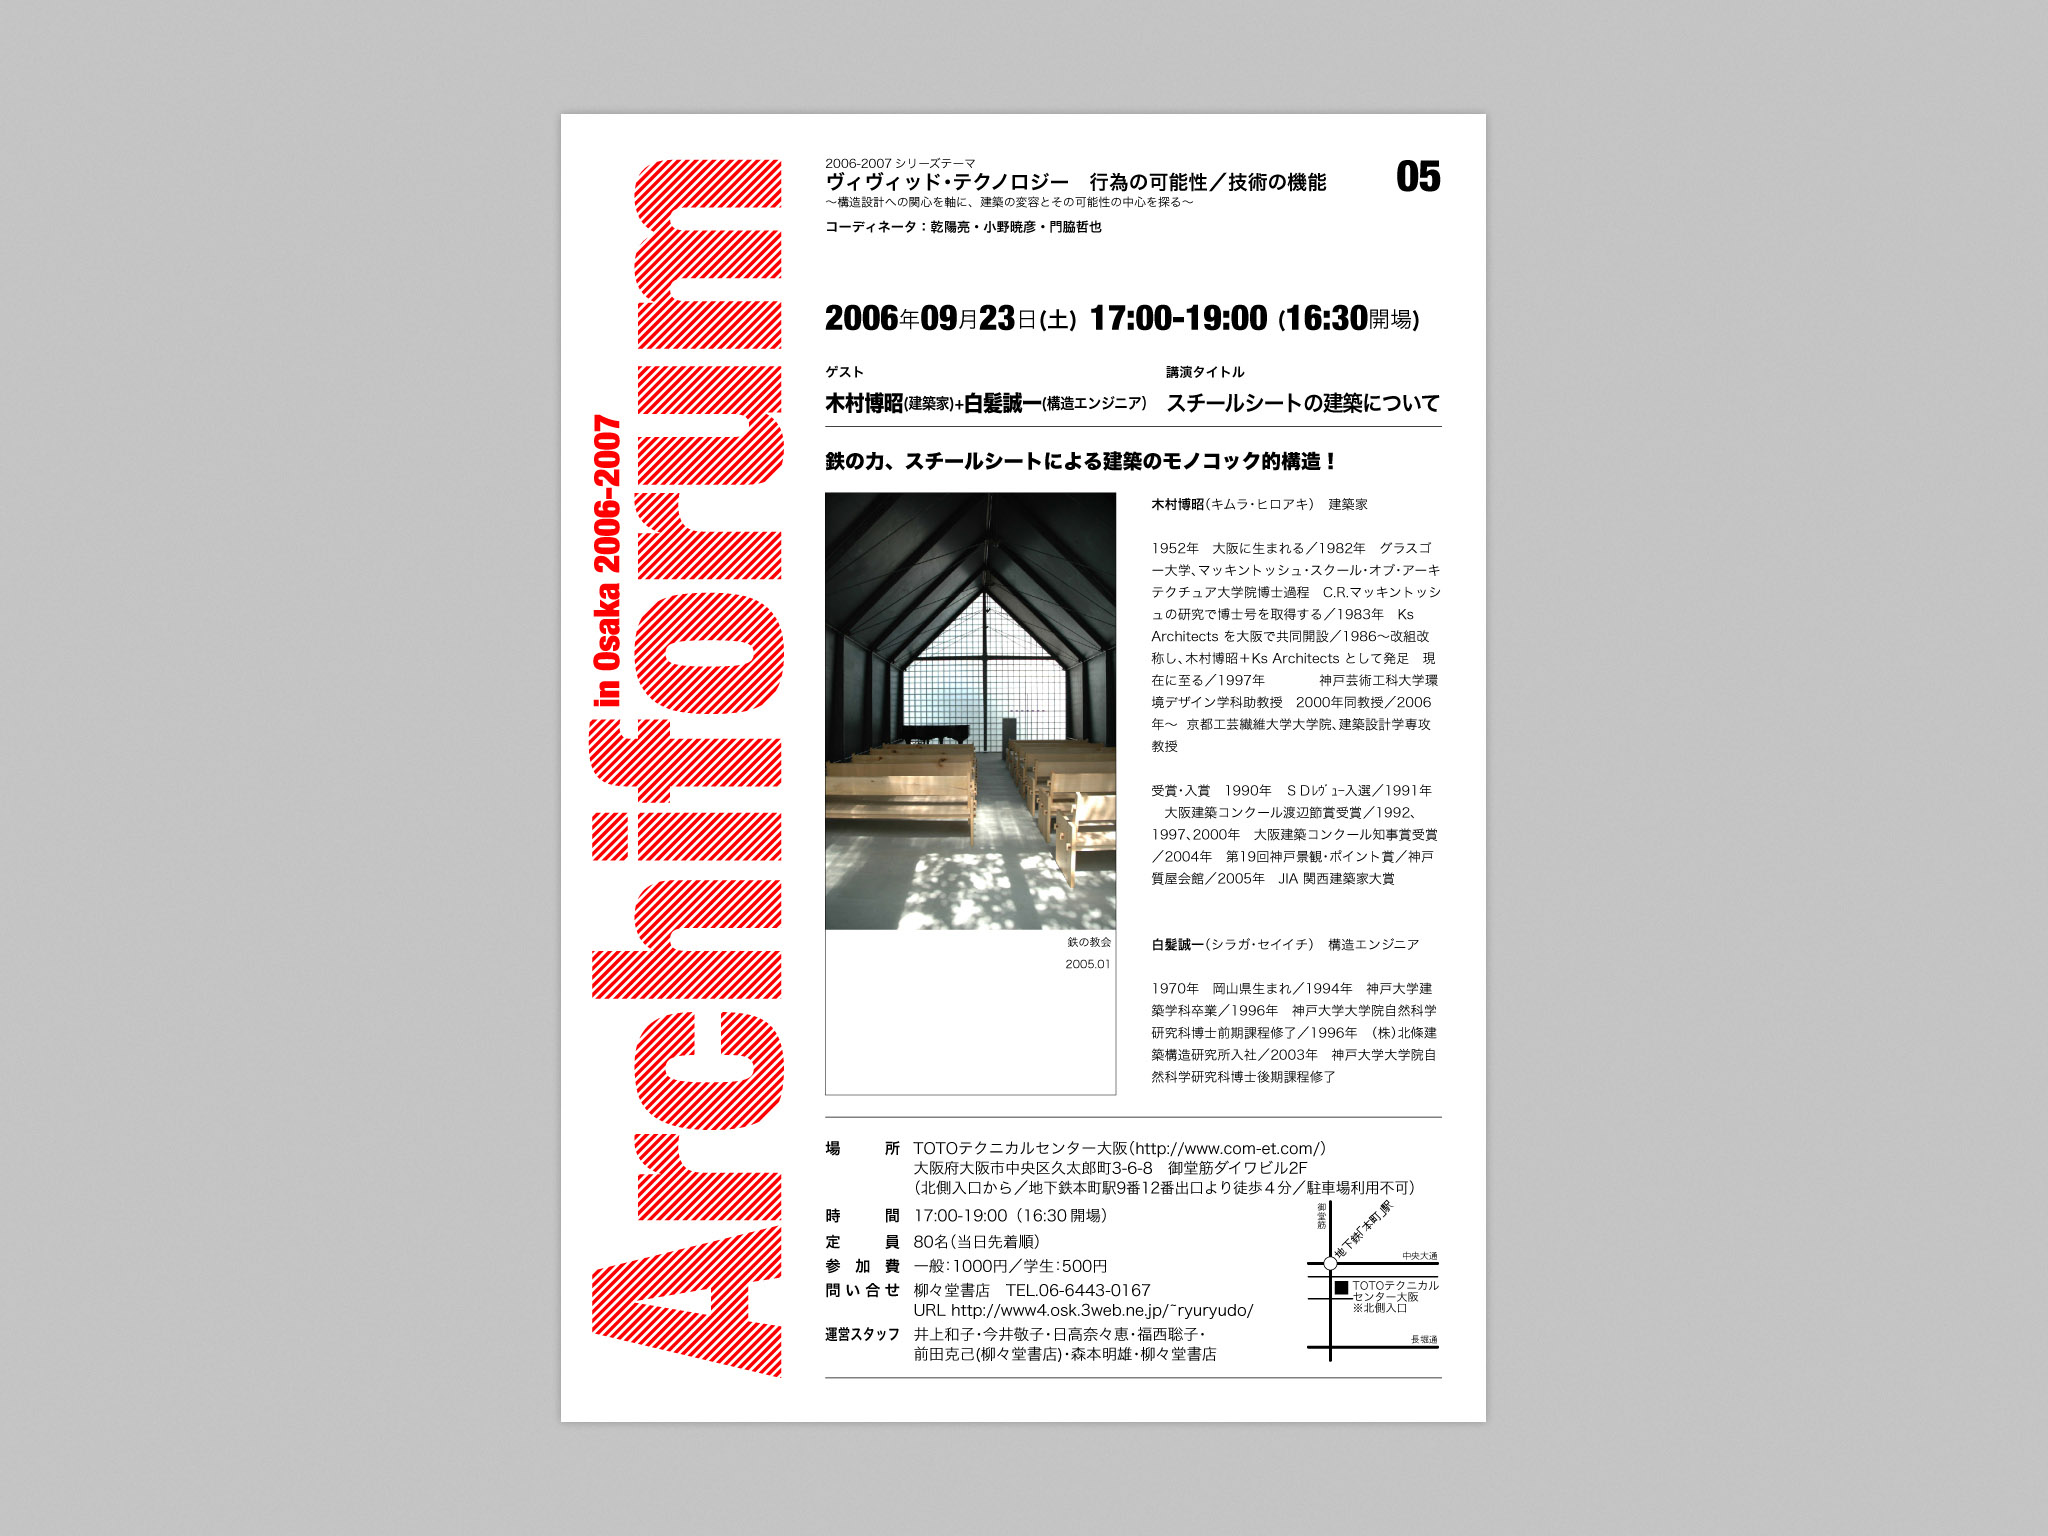 Archiforum in OSAKA 2006-2007